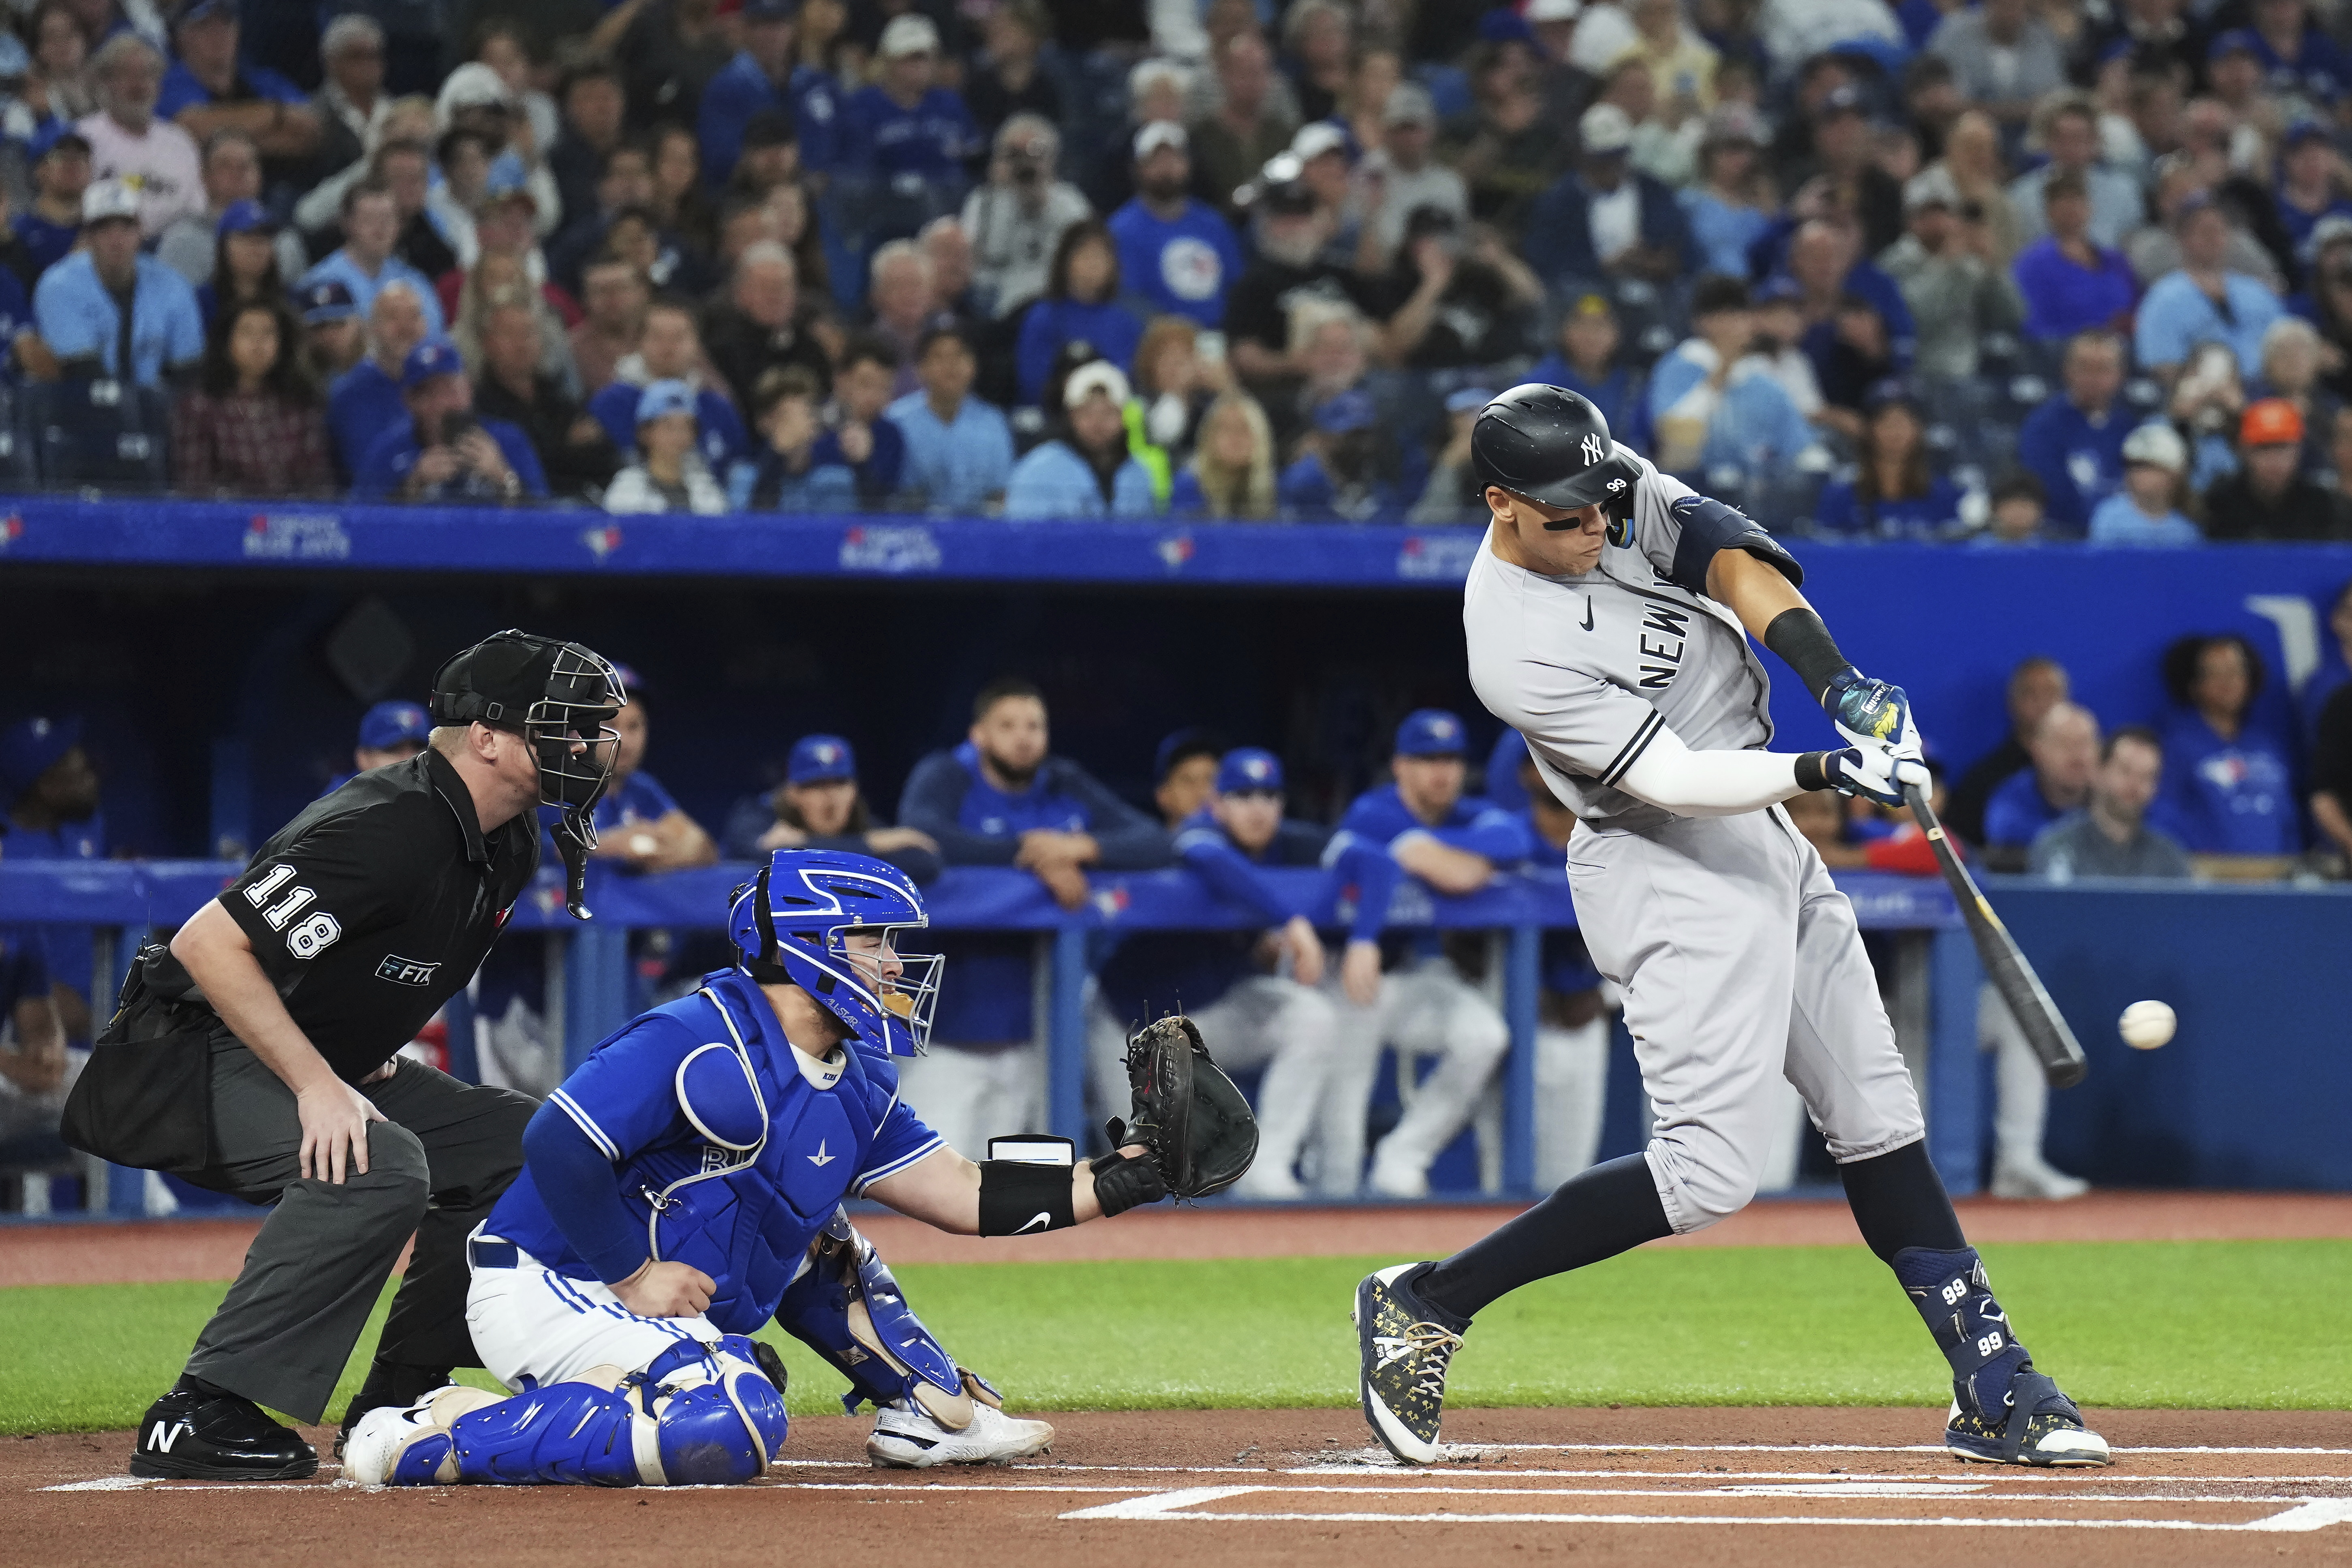 Yankees' Judge hits 61st home run, ties Maris' American League